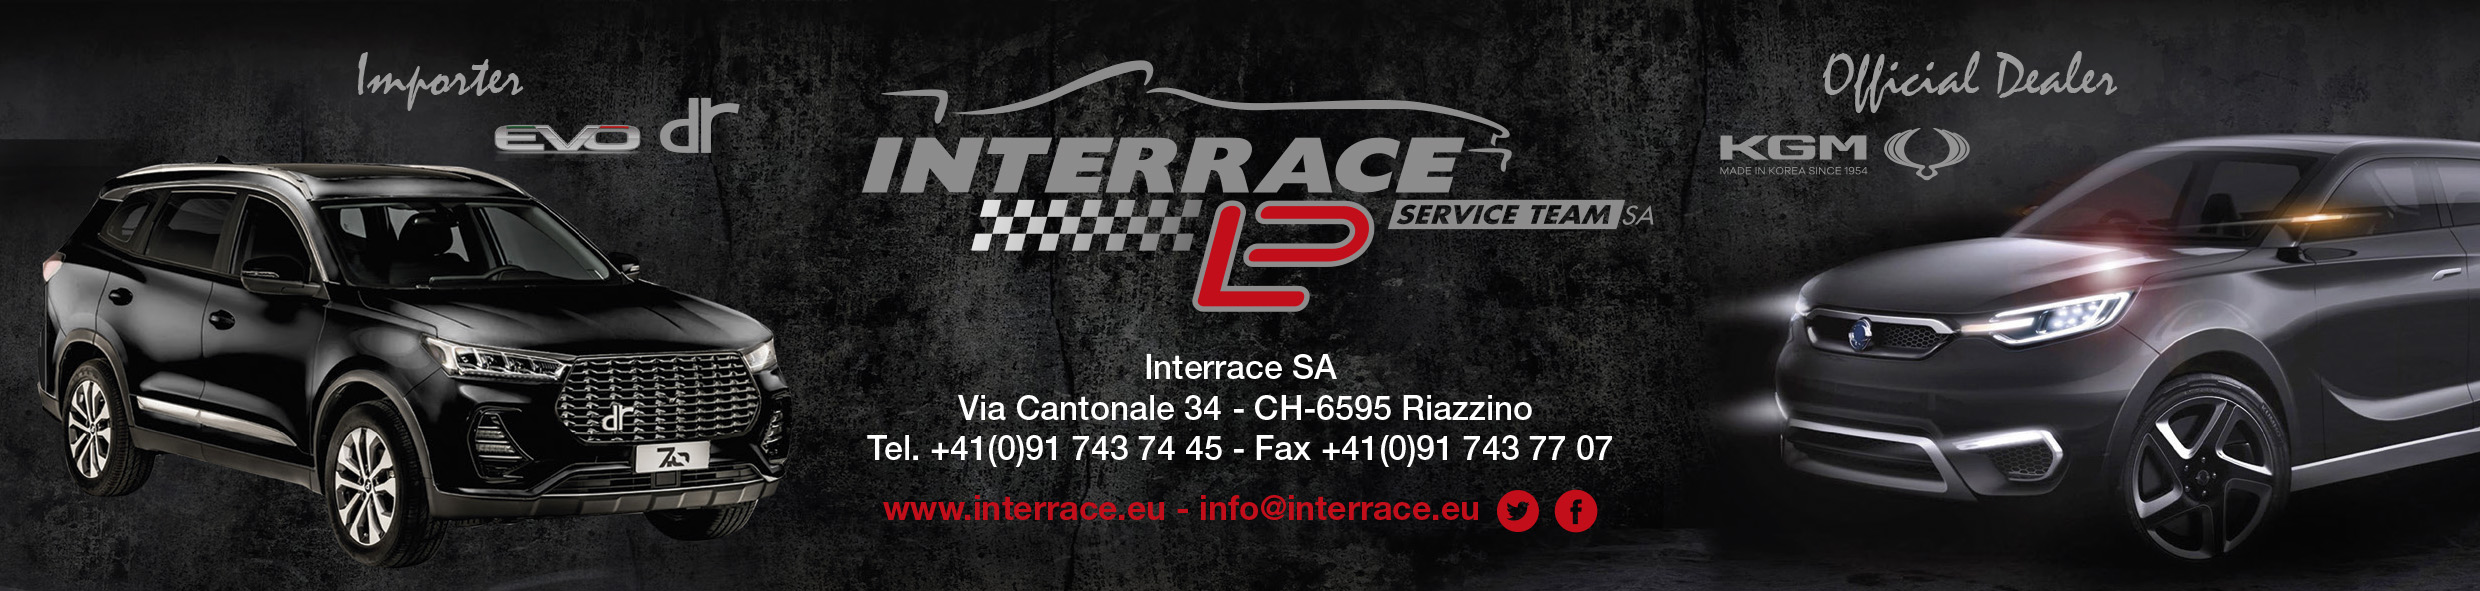 Interrace SA